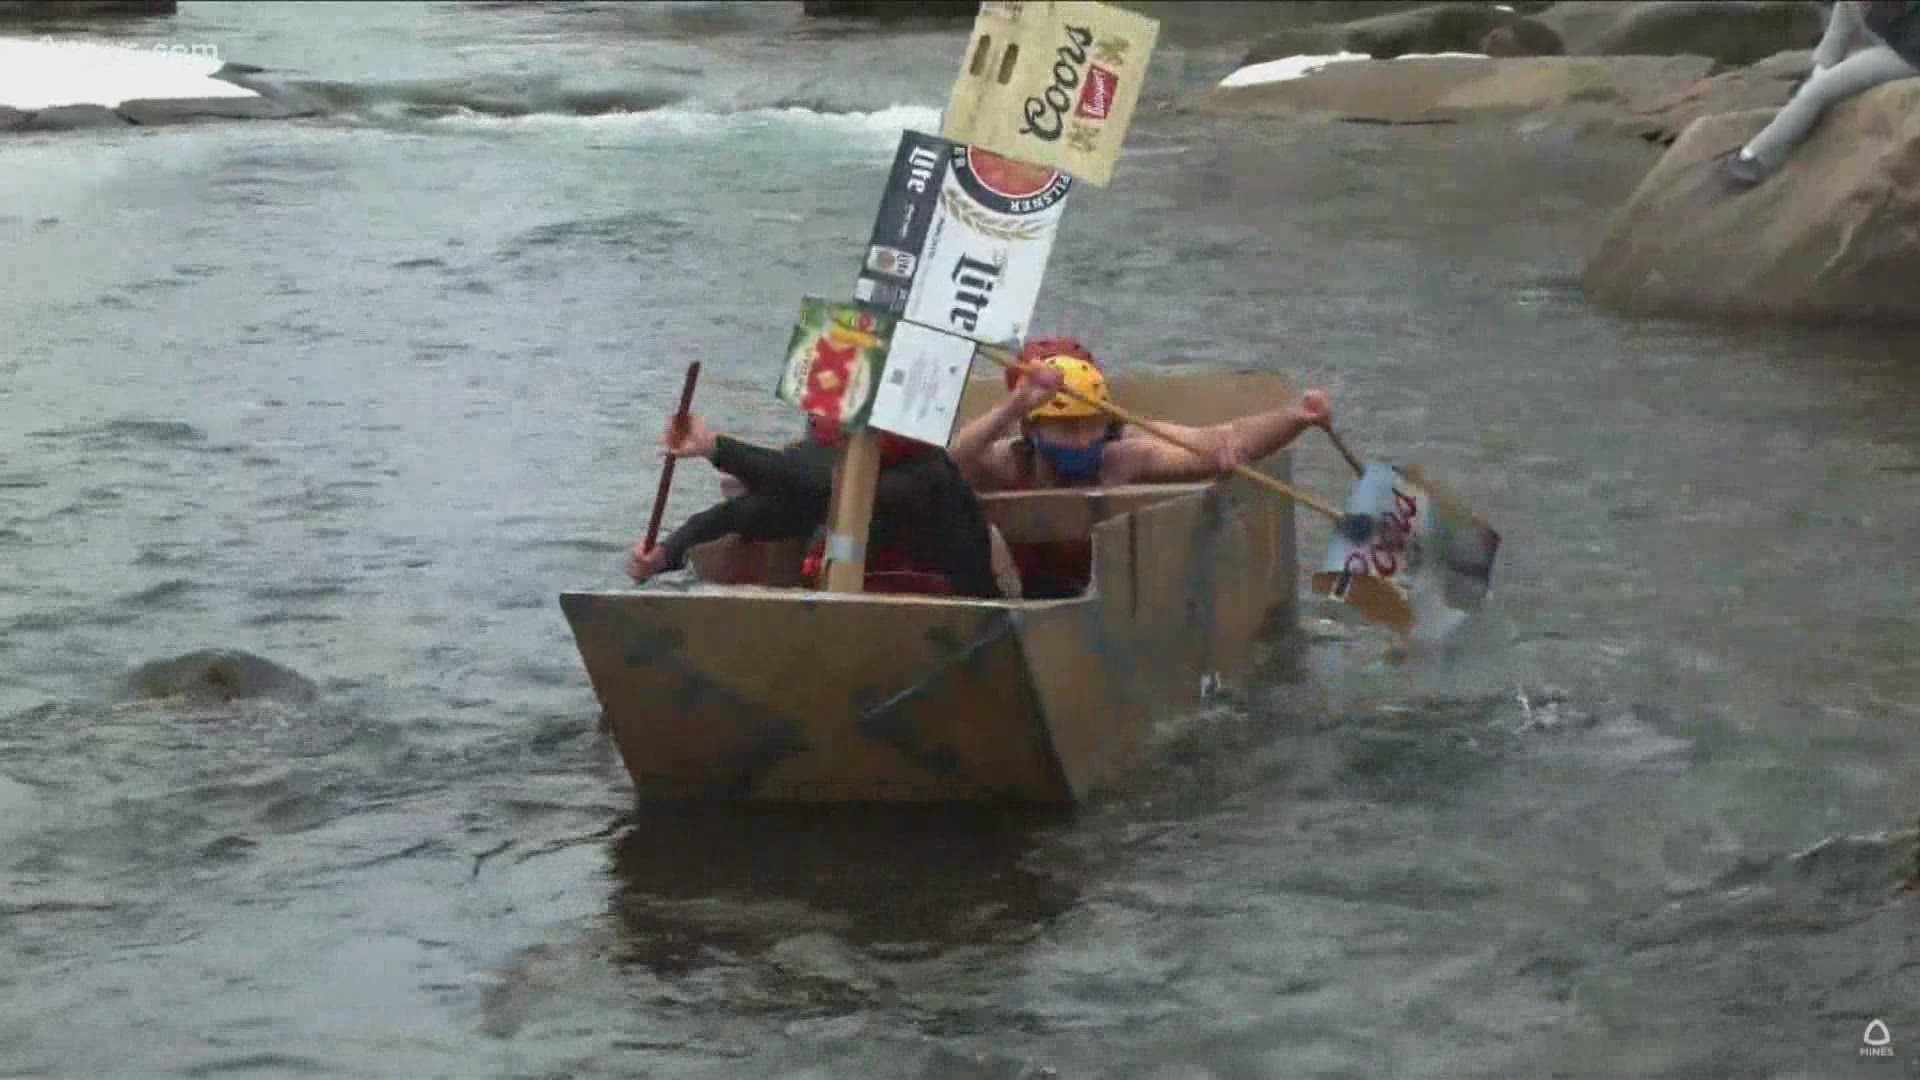 Colorado School of Mines students racing cardboard boats